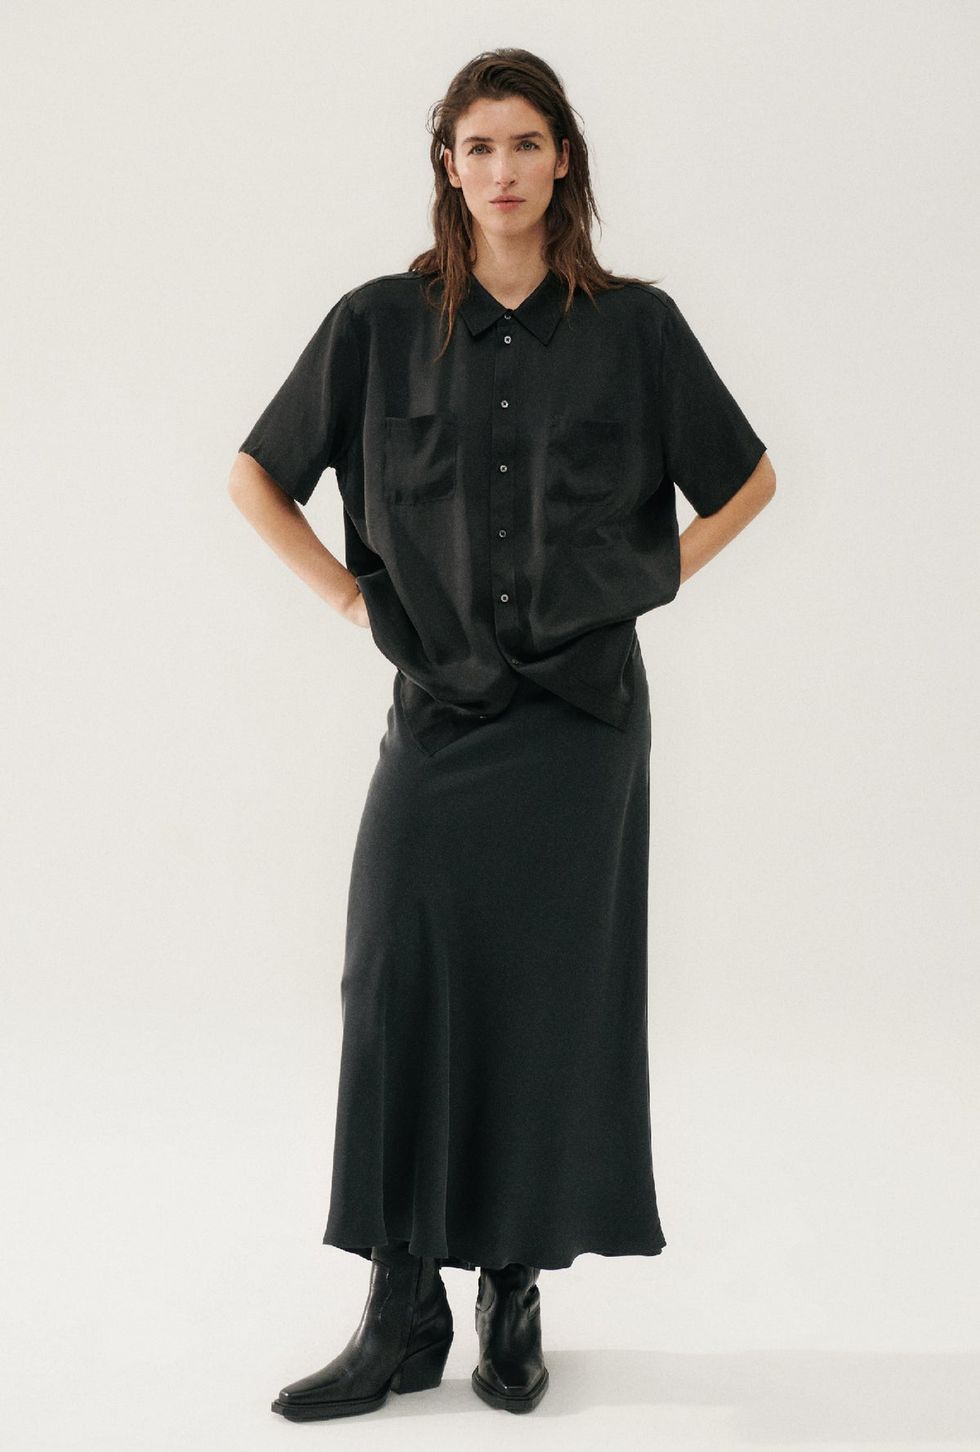 Emily Ratajkowski Is Peak Summer Style In Midi-Skirt And Platform Flip-Flops